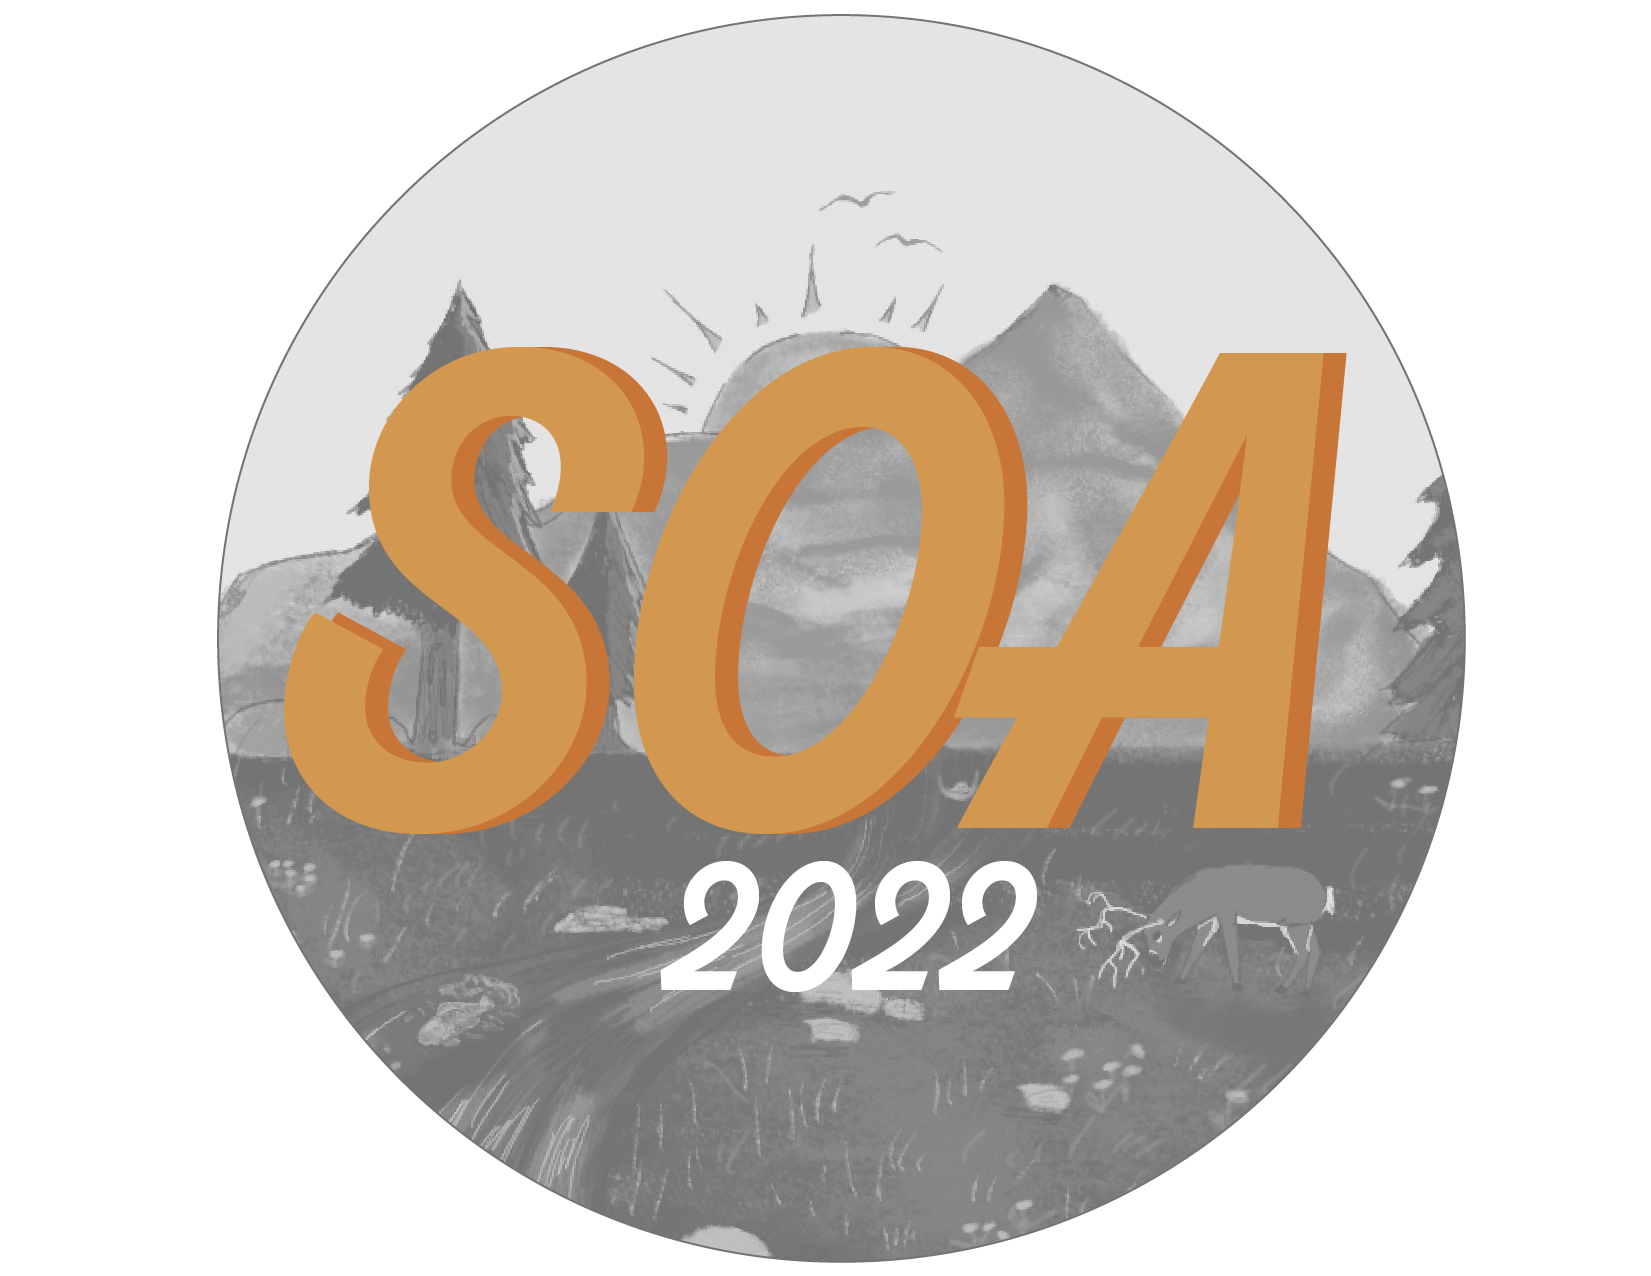 Soul of Athens 2022 logo